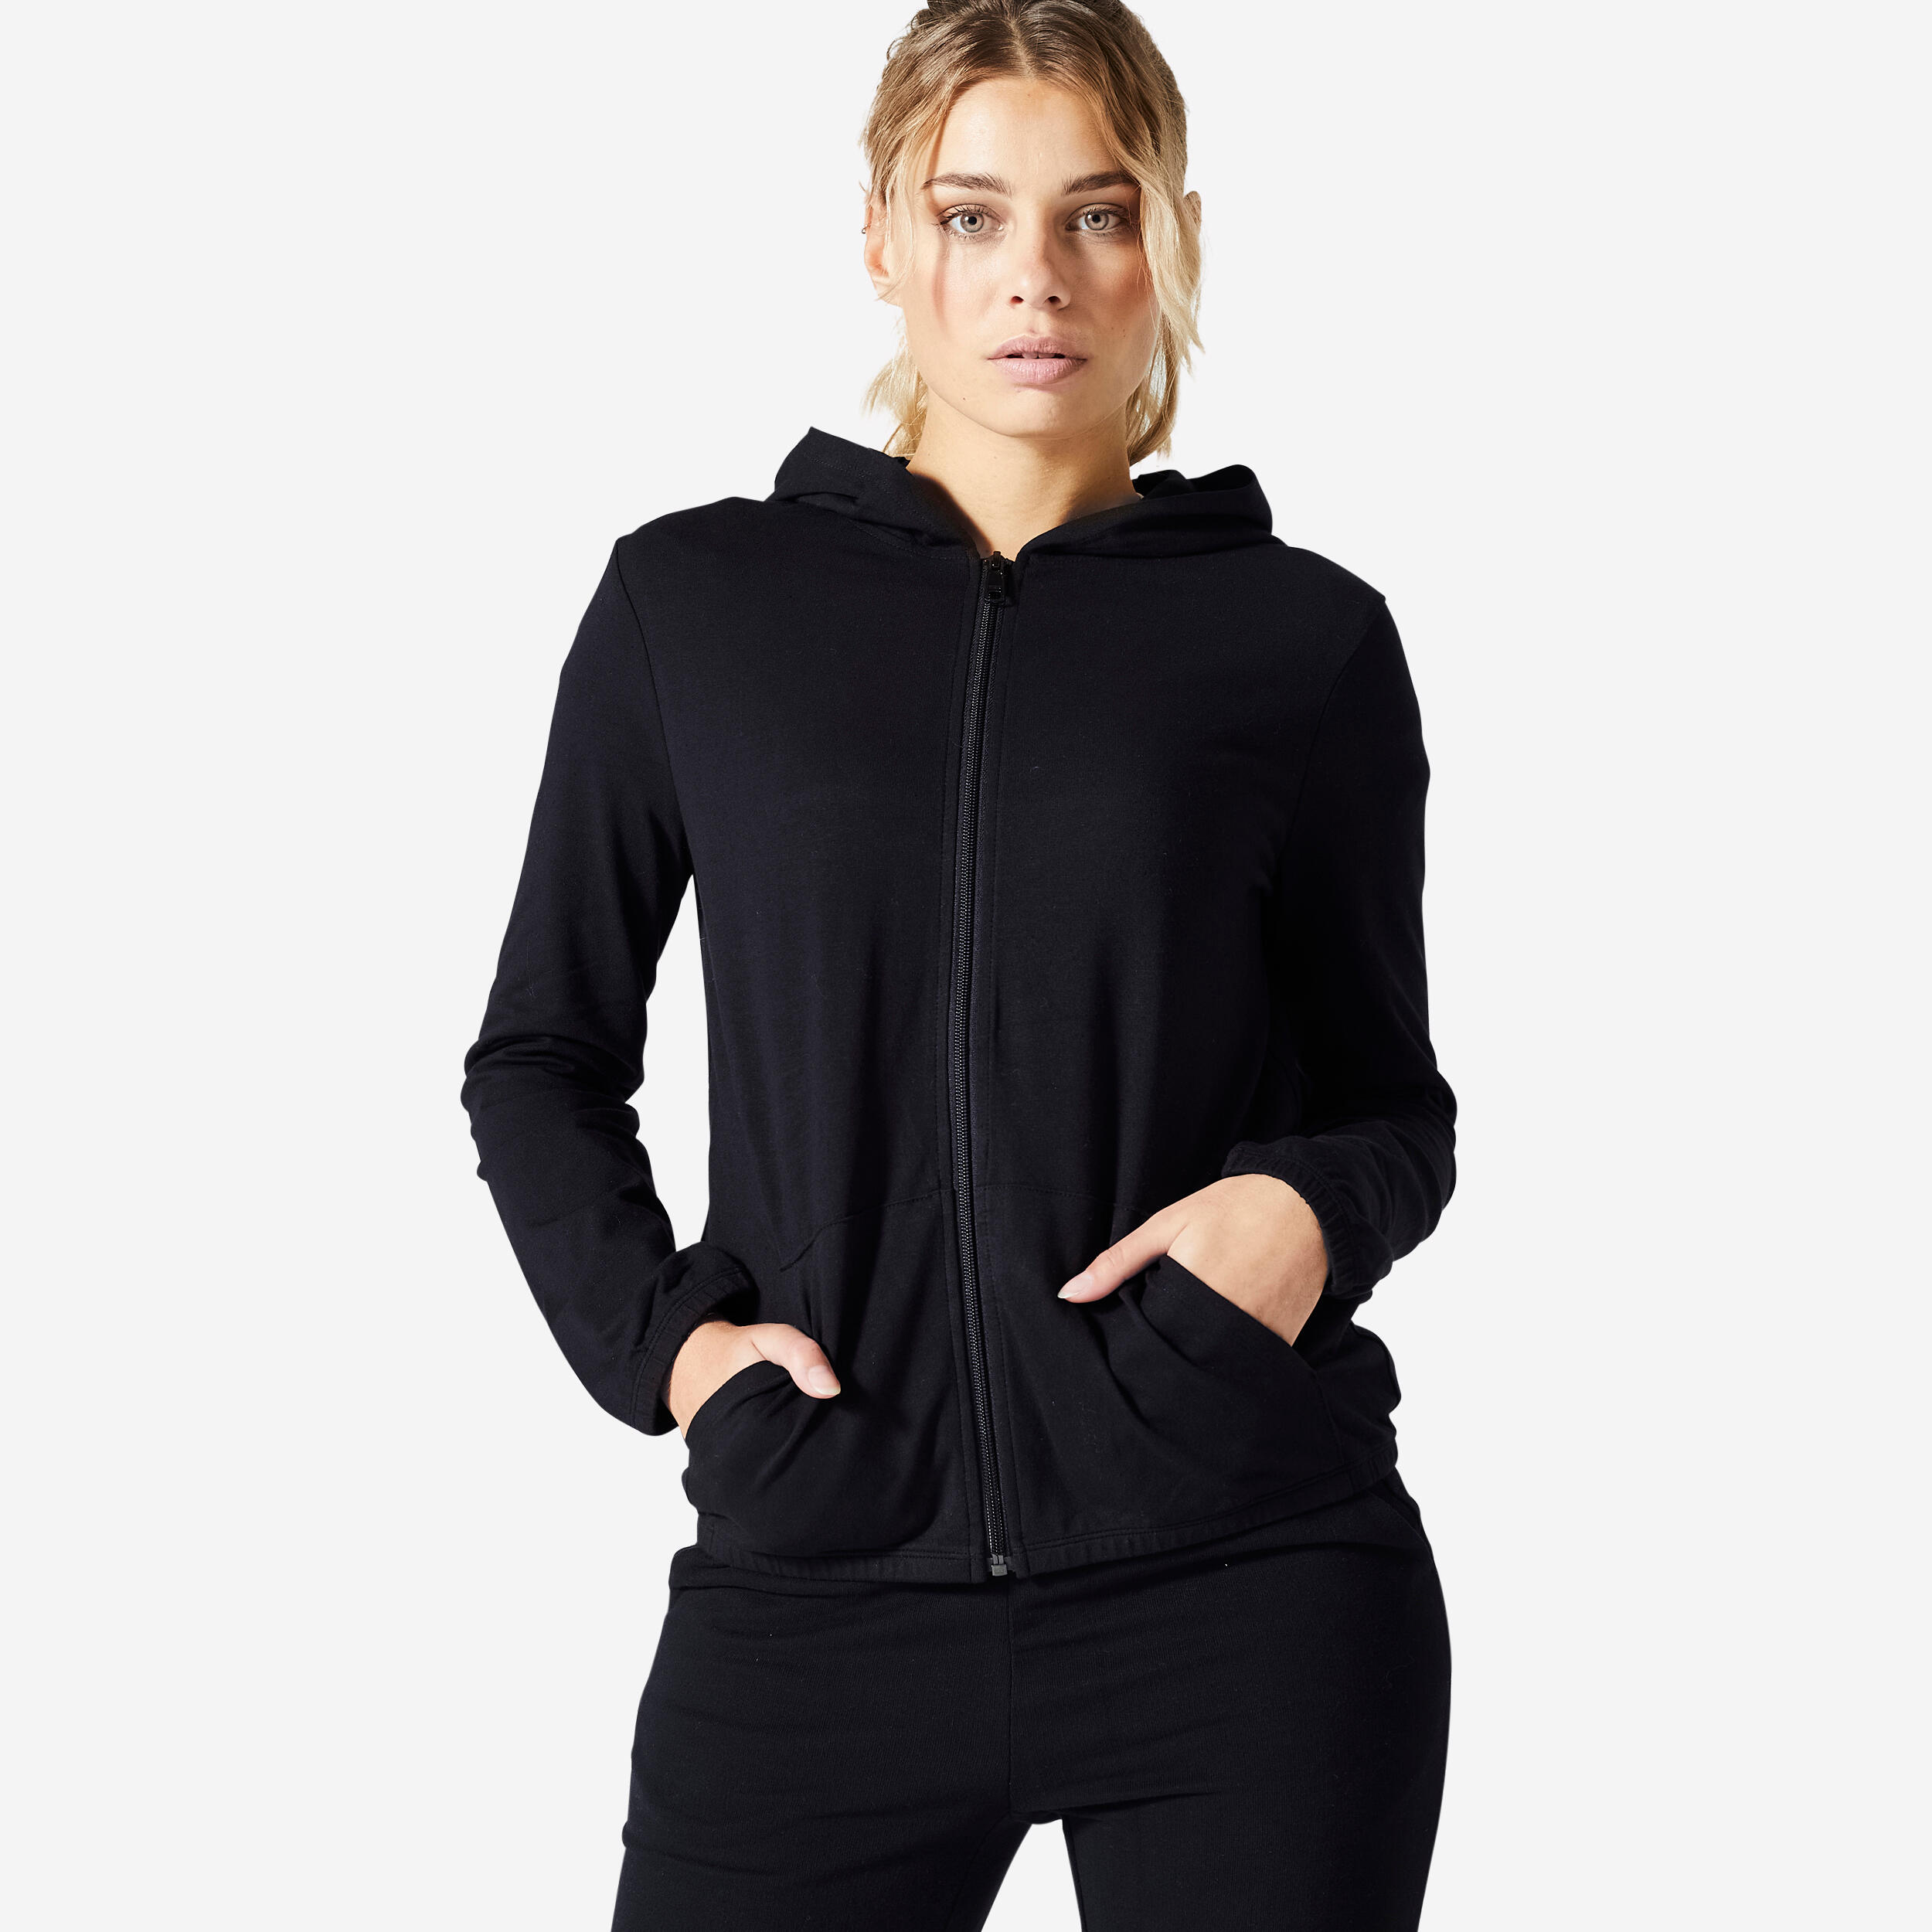 Black Decathlon Branded Hoodie Jackets, Women at Rs 1200/piece in